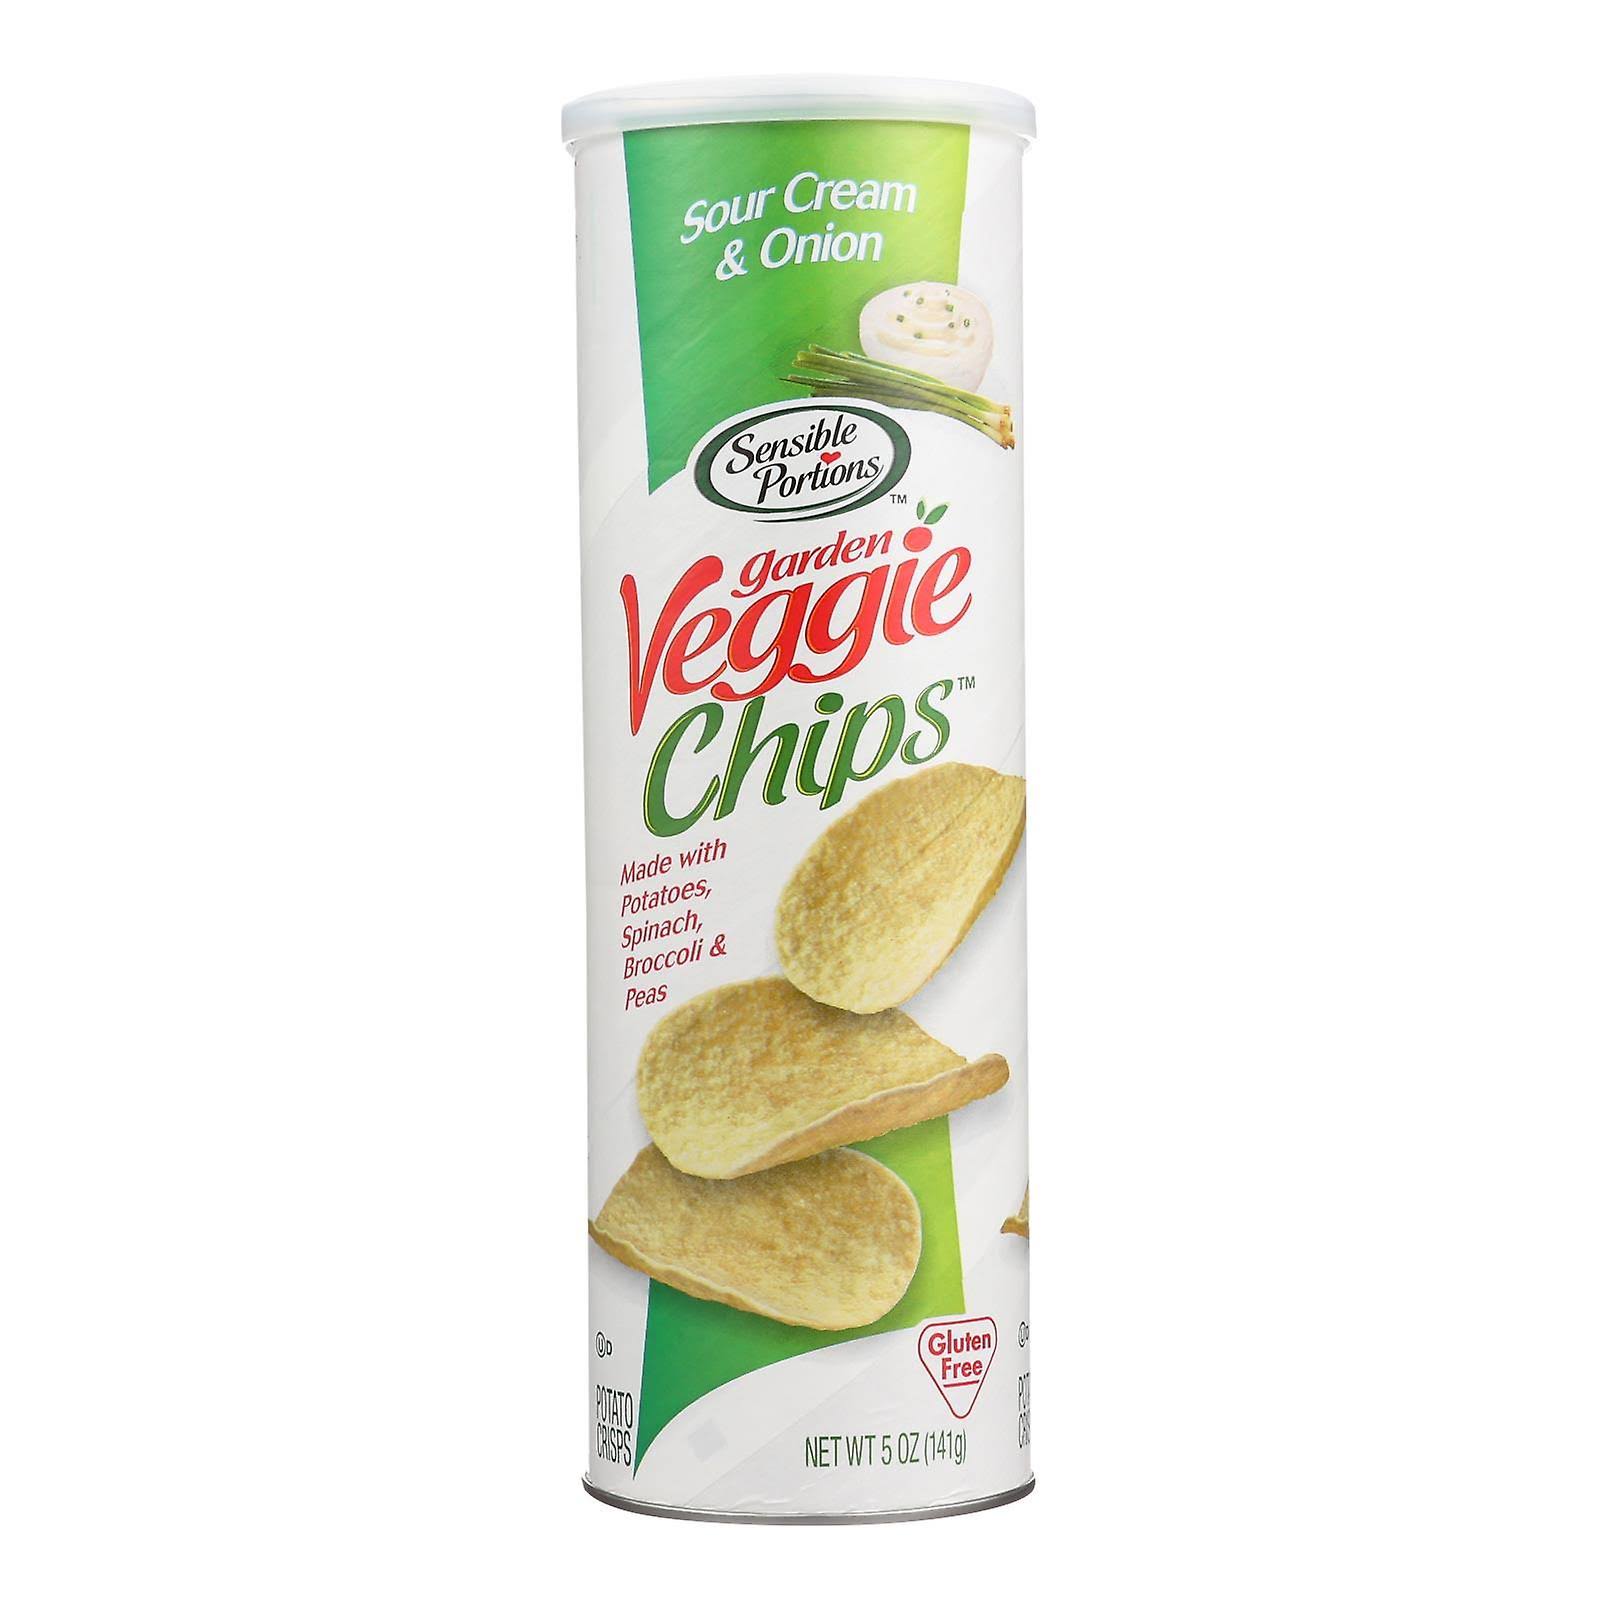 Sensible Portions Garden Veggie Chips Sour Cream and Onion Potato Chips - 5oz